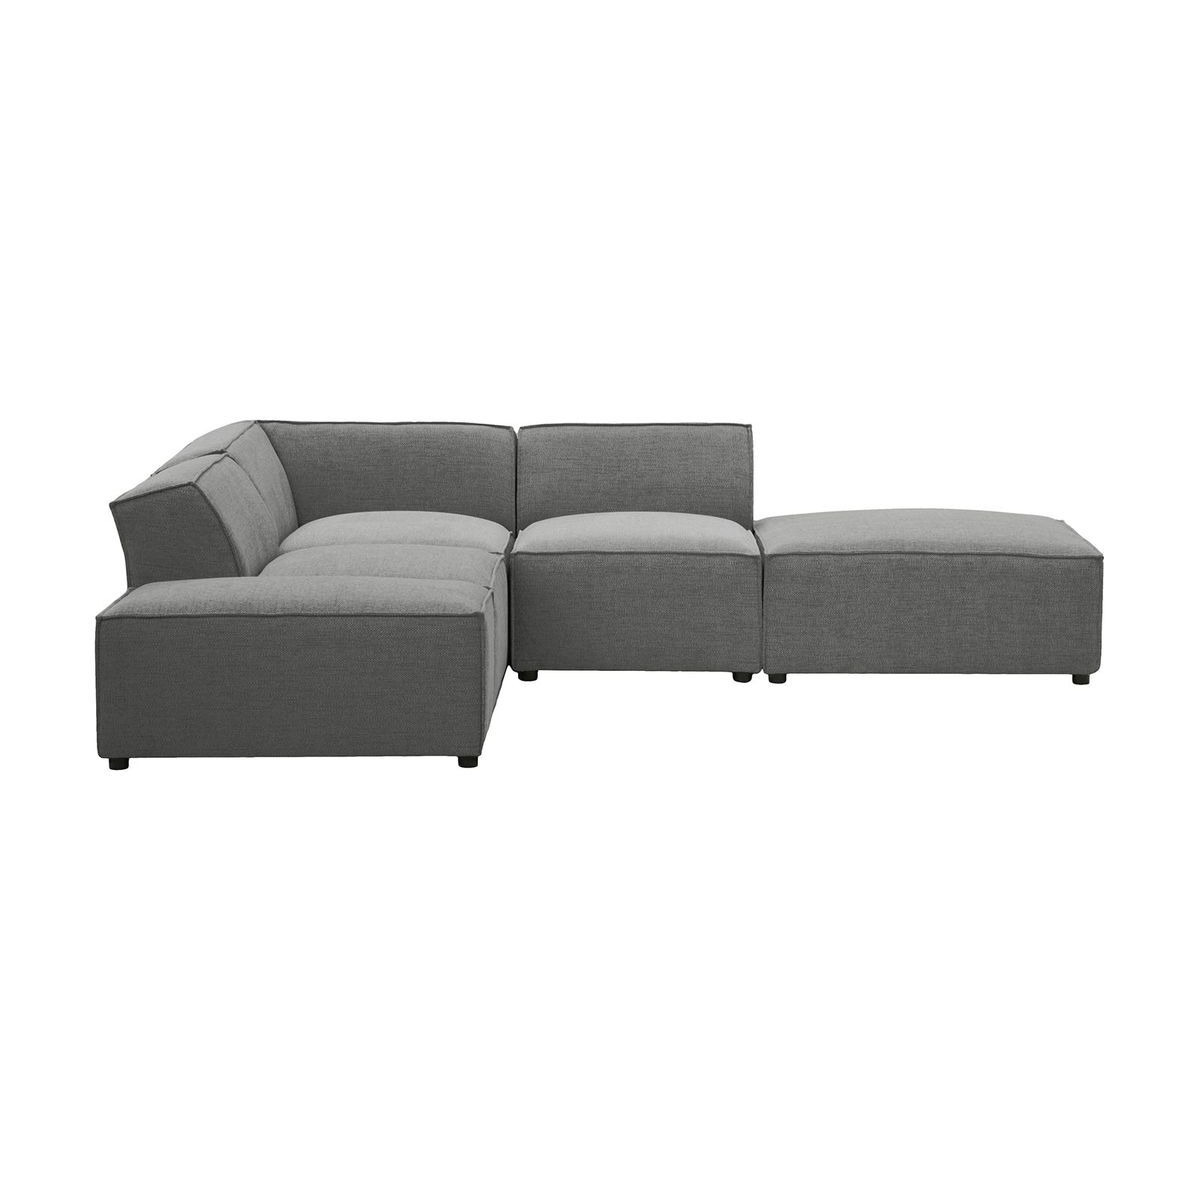 Mojo Modular Corner Sofa, dark red - image 1